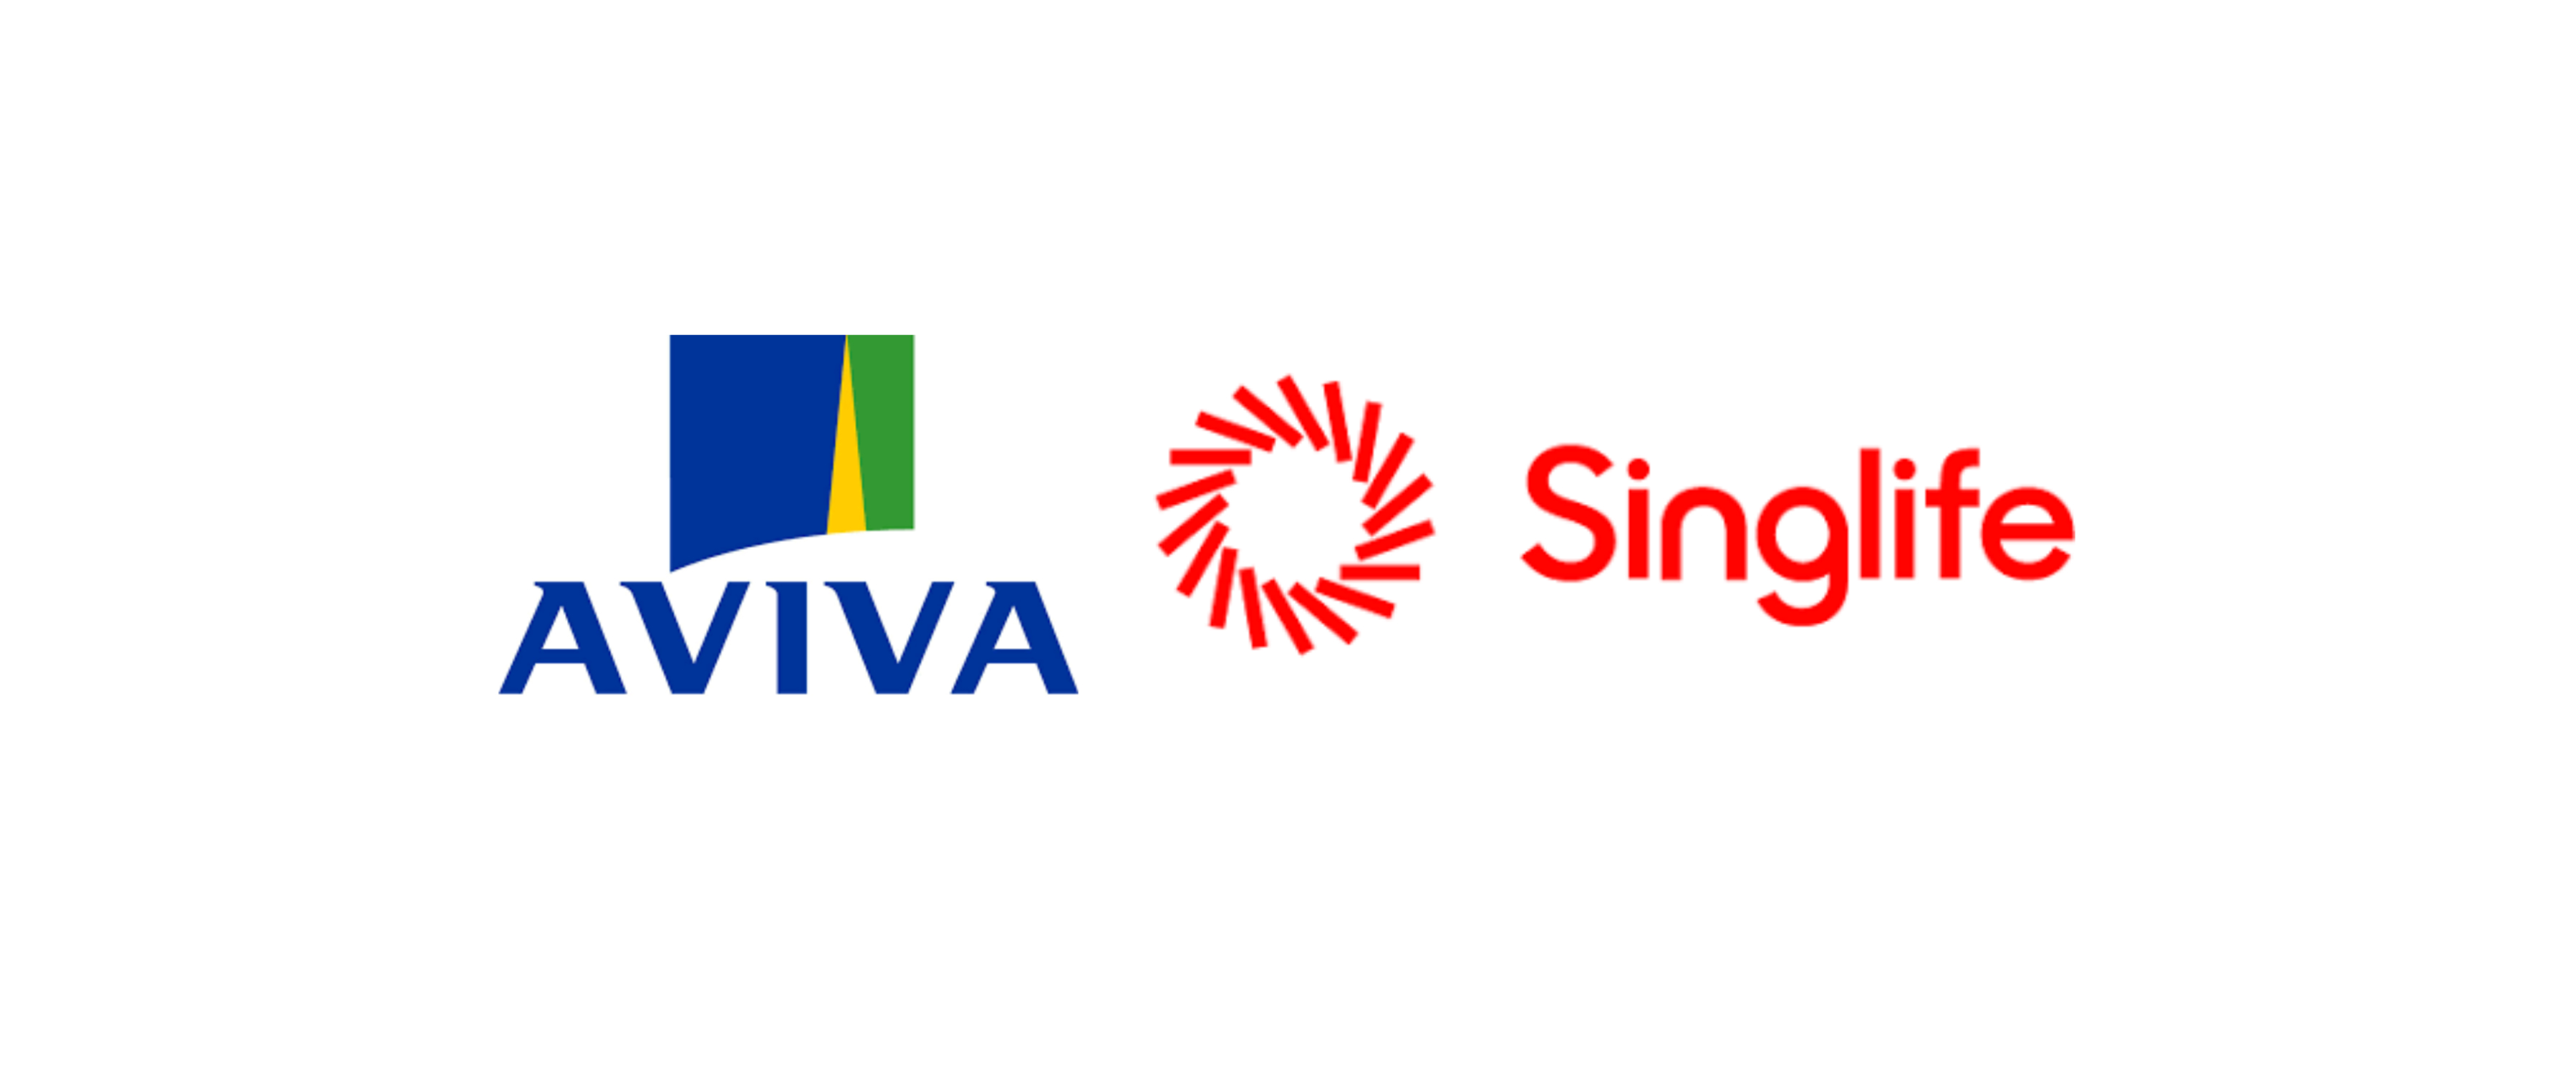 Image of Aviva and Singlife logo